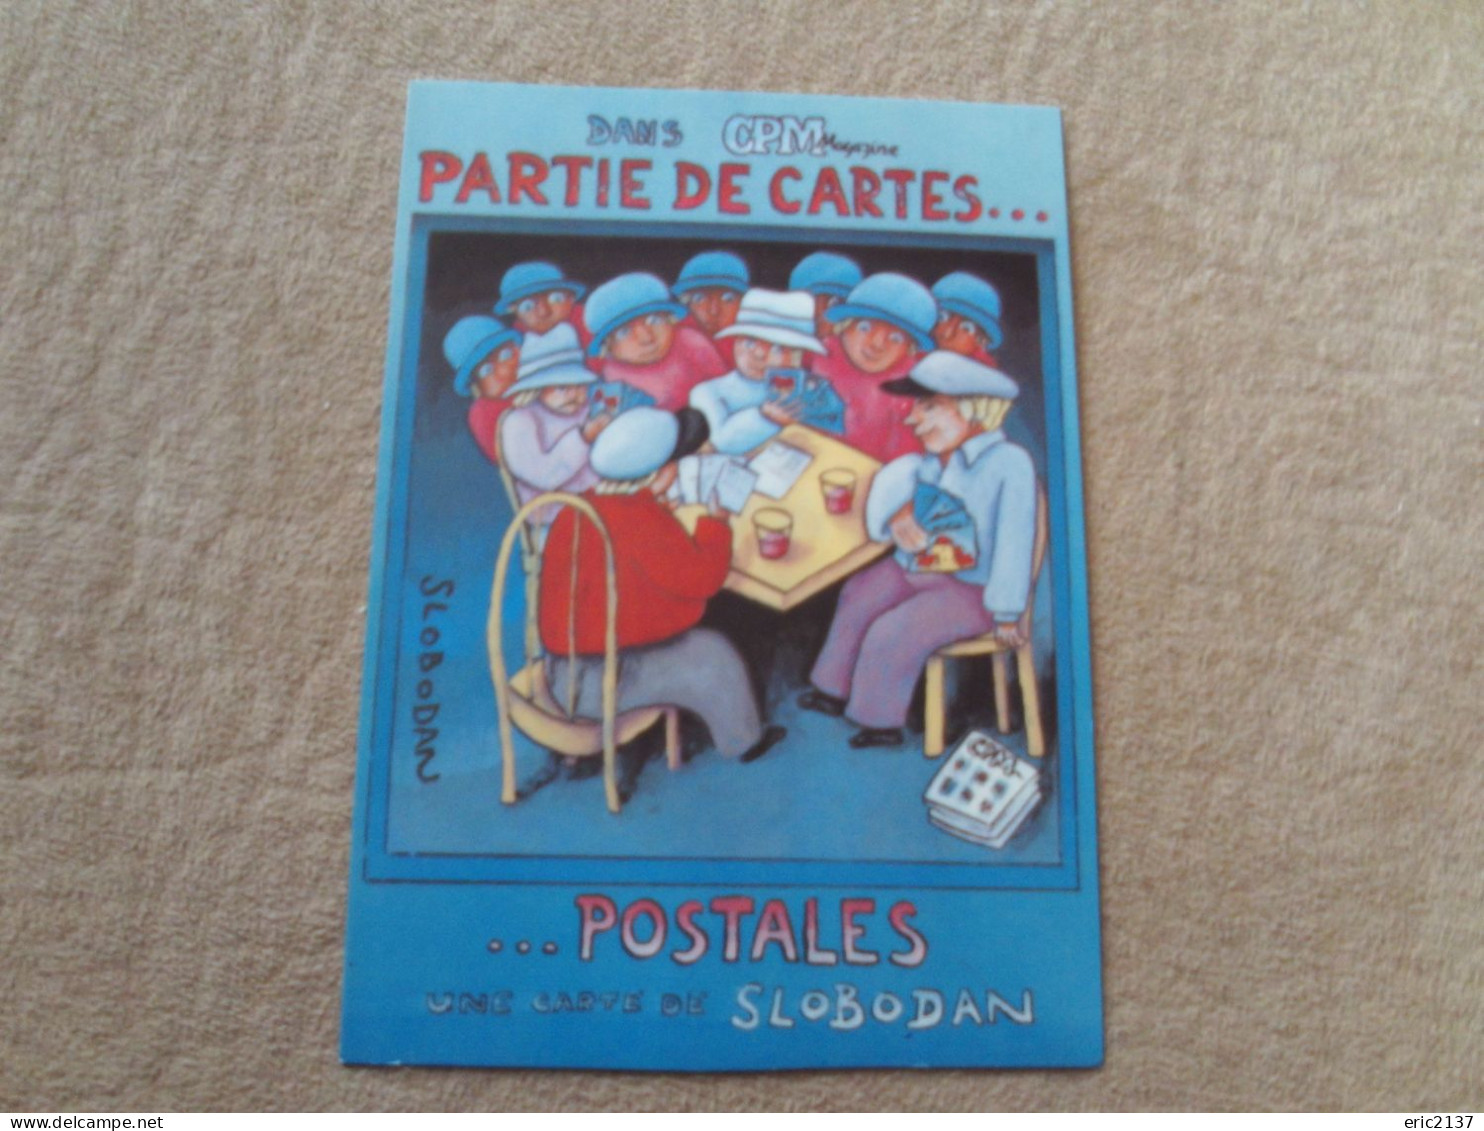 BELLE ILLUSTRATION ..."PARTIE DE CARTES...POSTALES" ...SIGNE SLOBODAN (re) - Slobodan